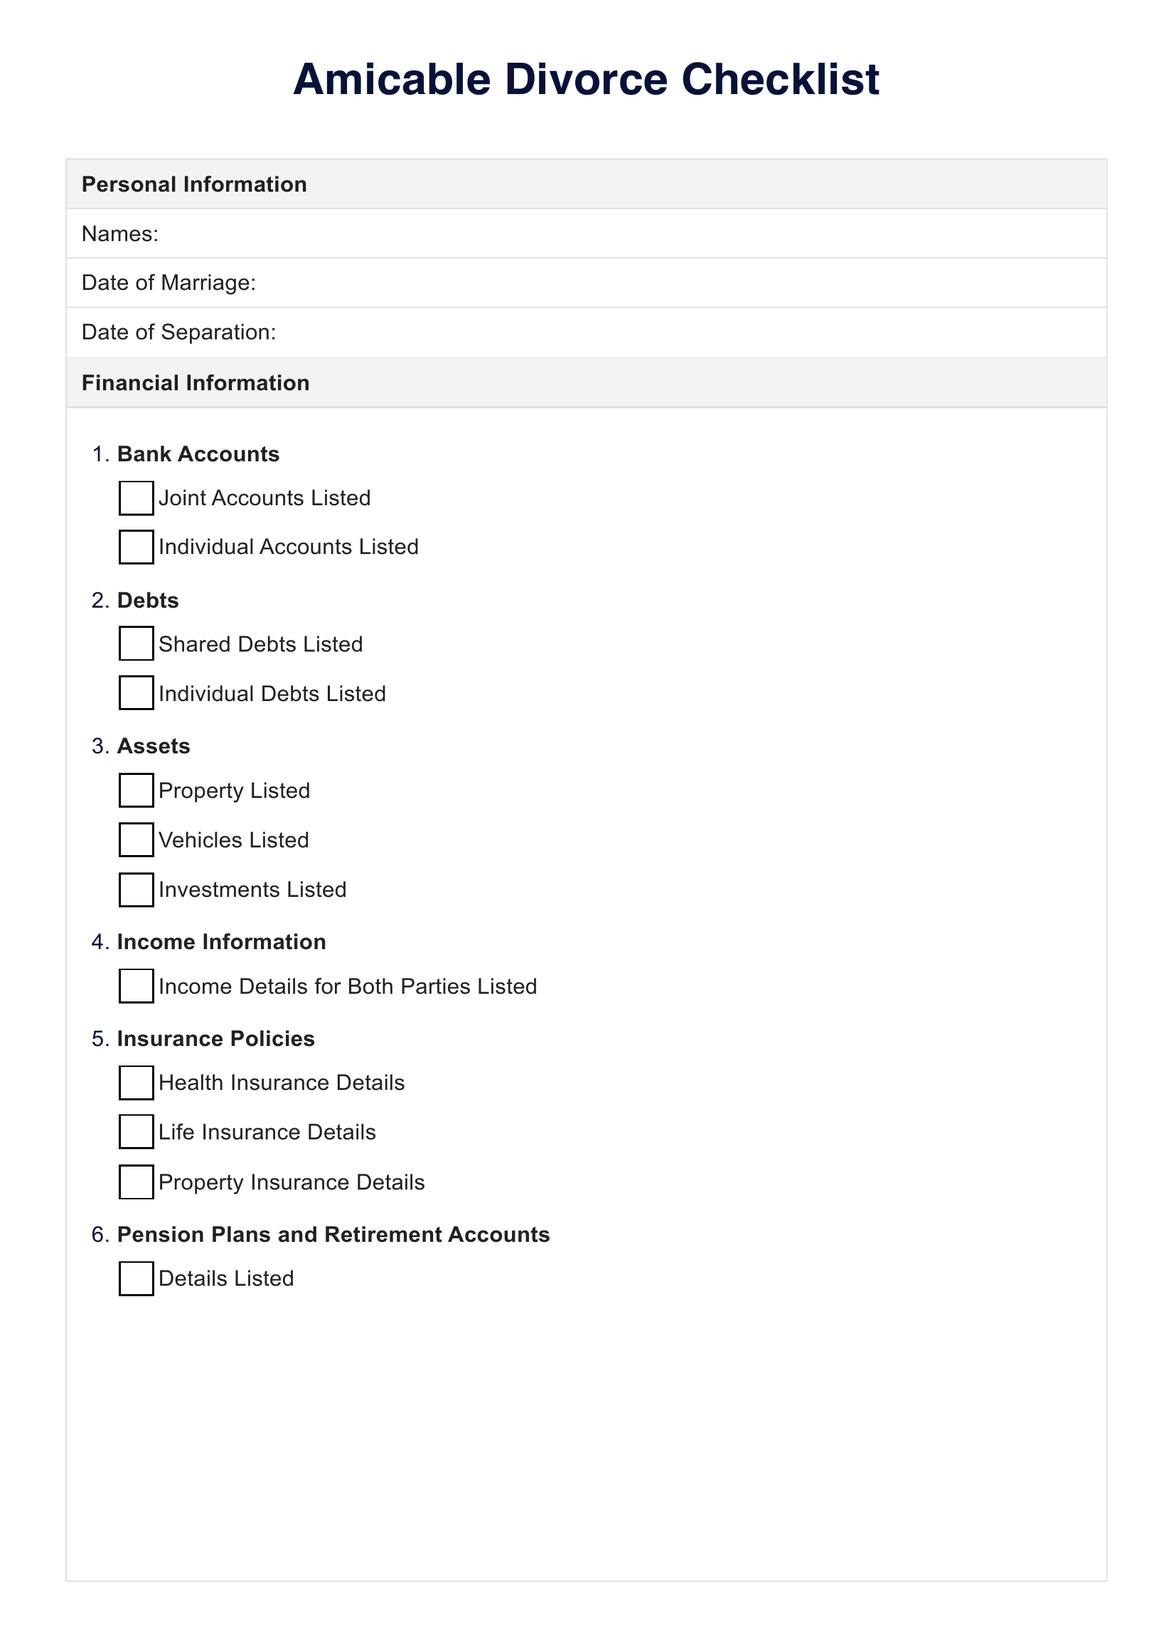 Amicable Divorce Checklist PDF Example